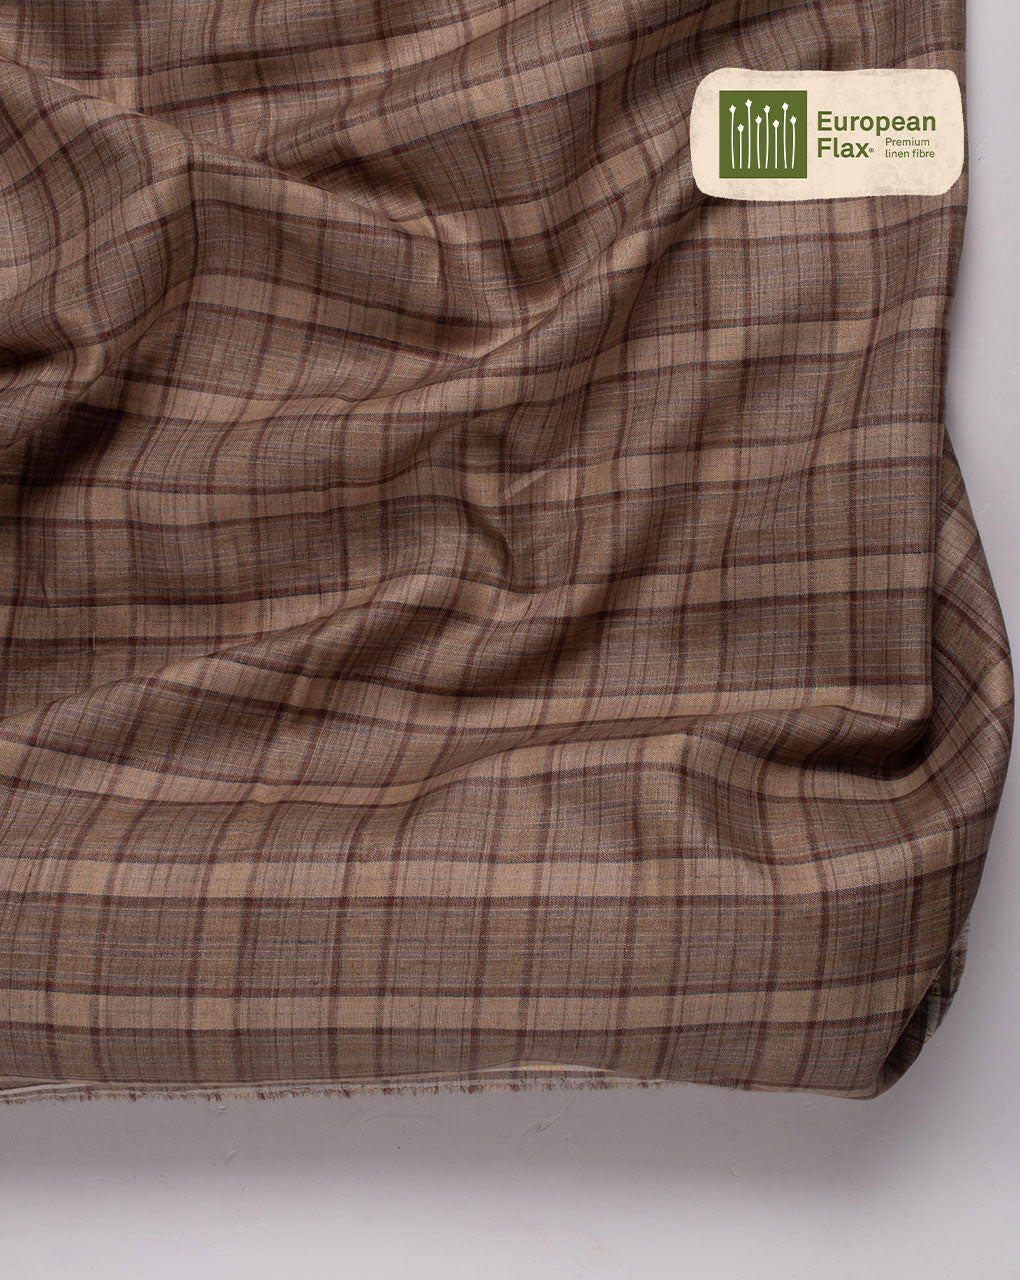 Yarn Dyed Linen European Flax Certified Fabric ( Width 58 Inch ) - Fabriclore.com